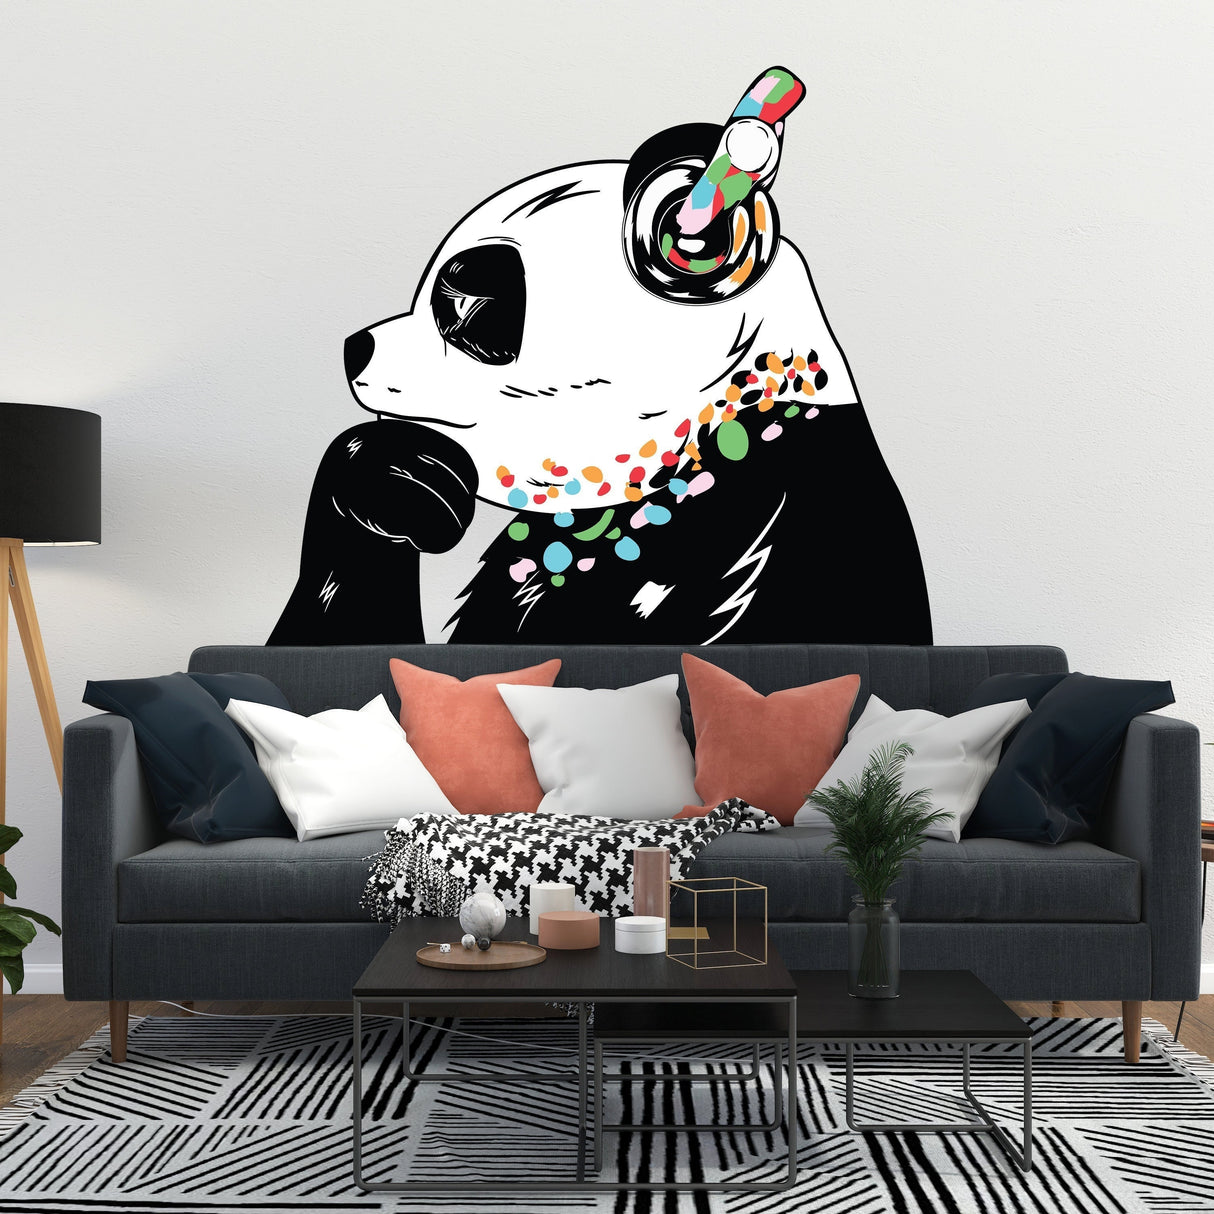 Thinking Panda Sticker - Inspired by Banksy Art Vinyl Dj Baksy Wall Decal